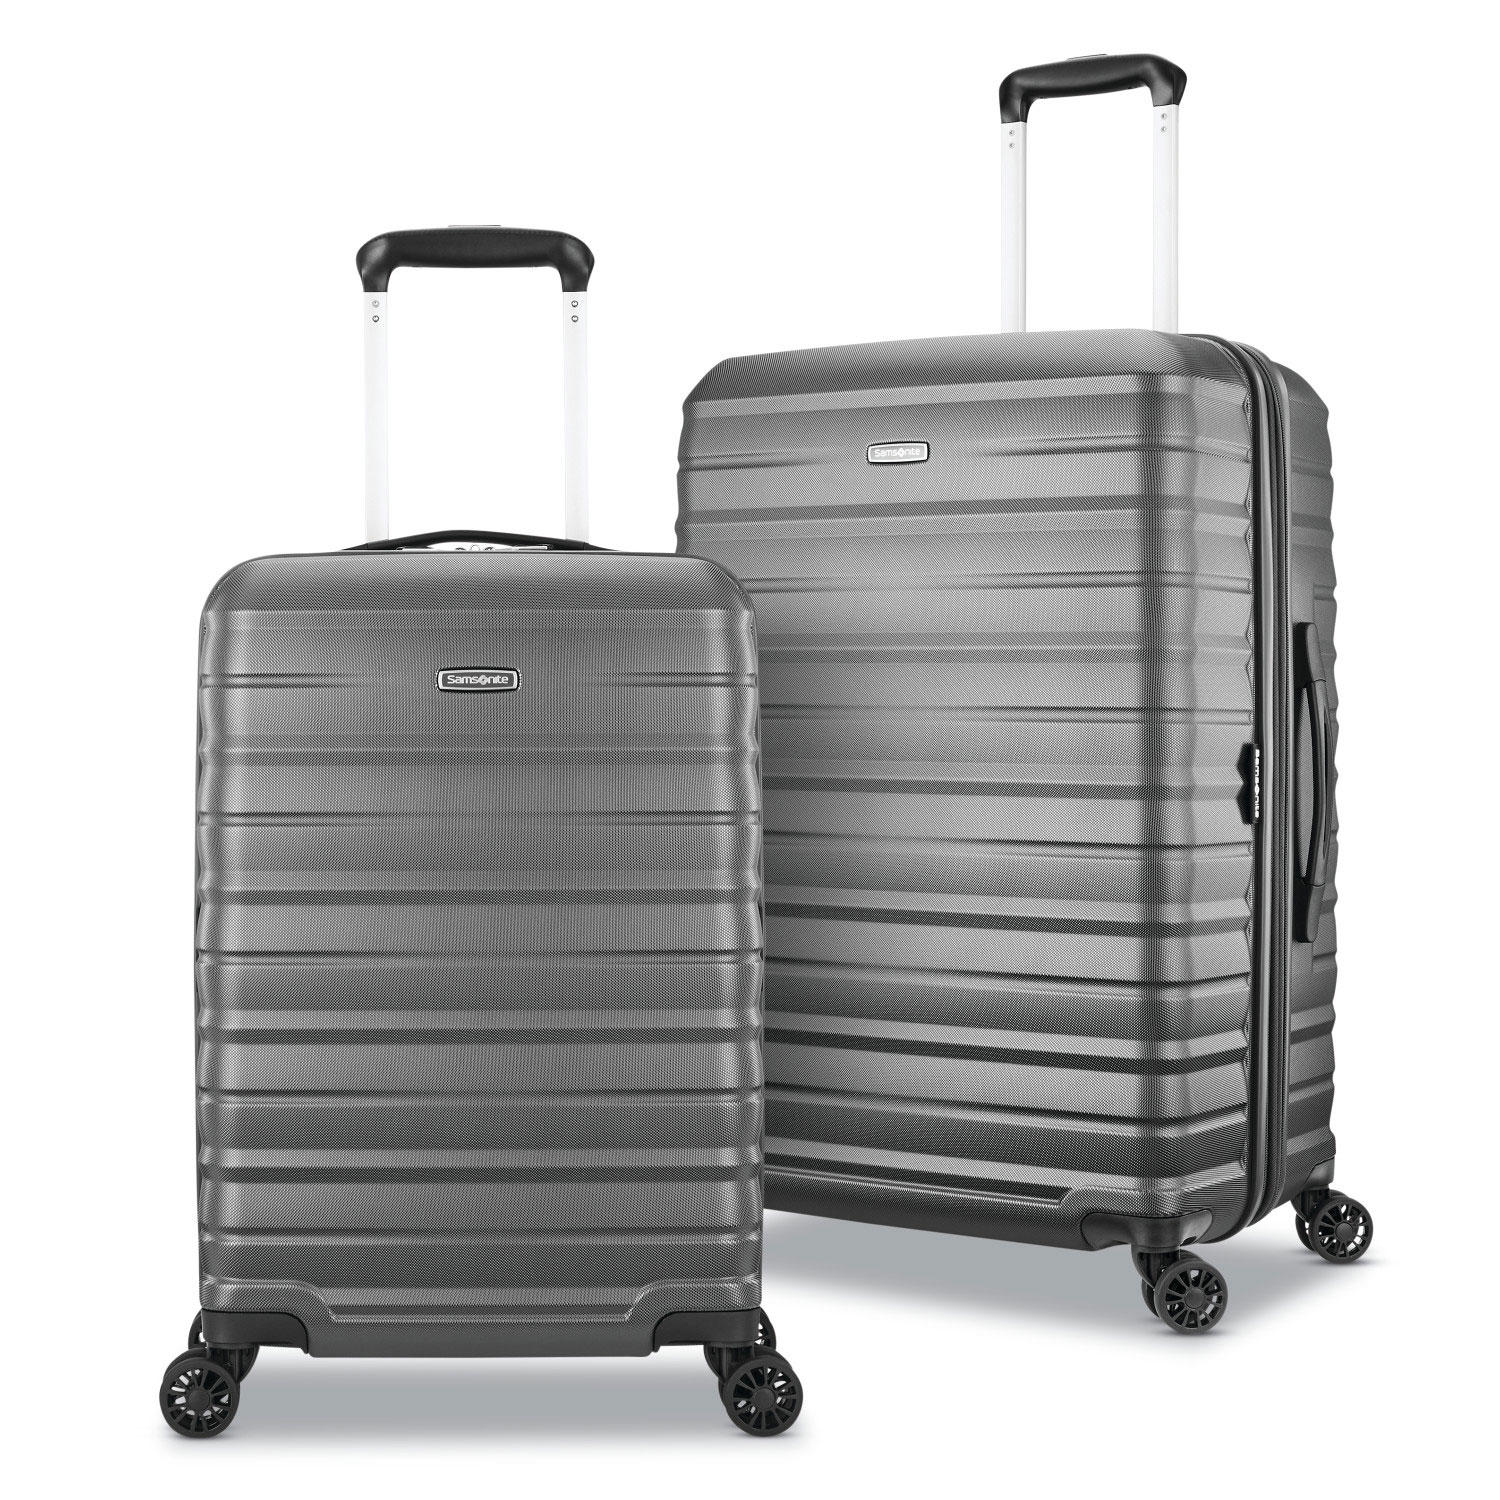 Samsonite Gatewood 2-Piece Hardside Spinner Luggage Set